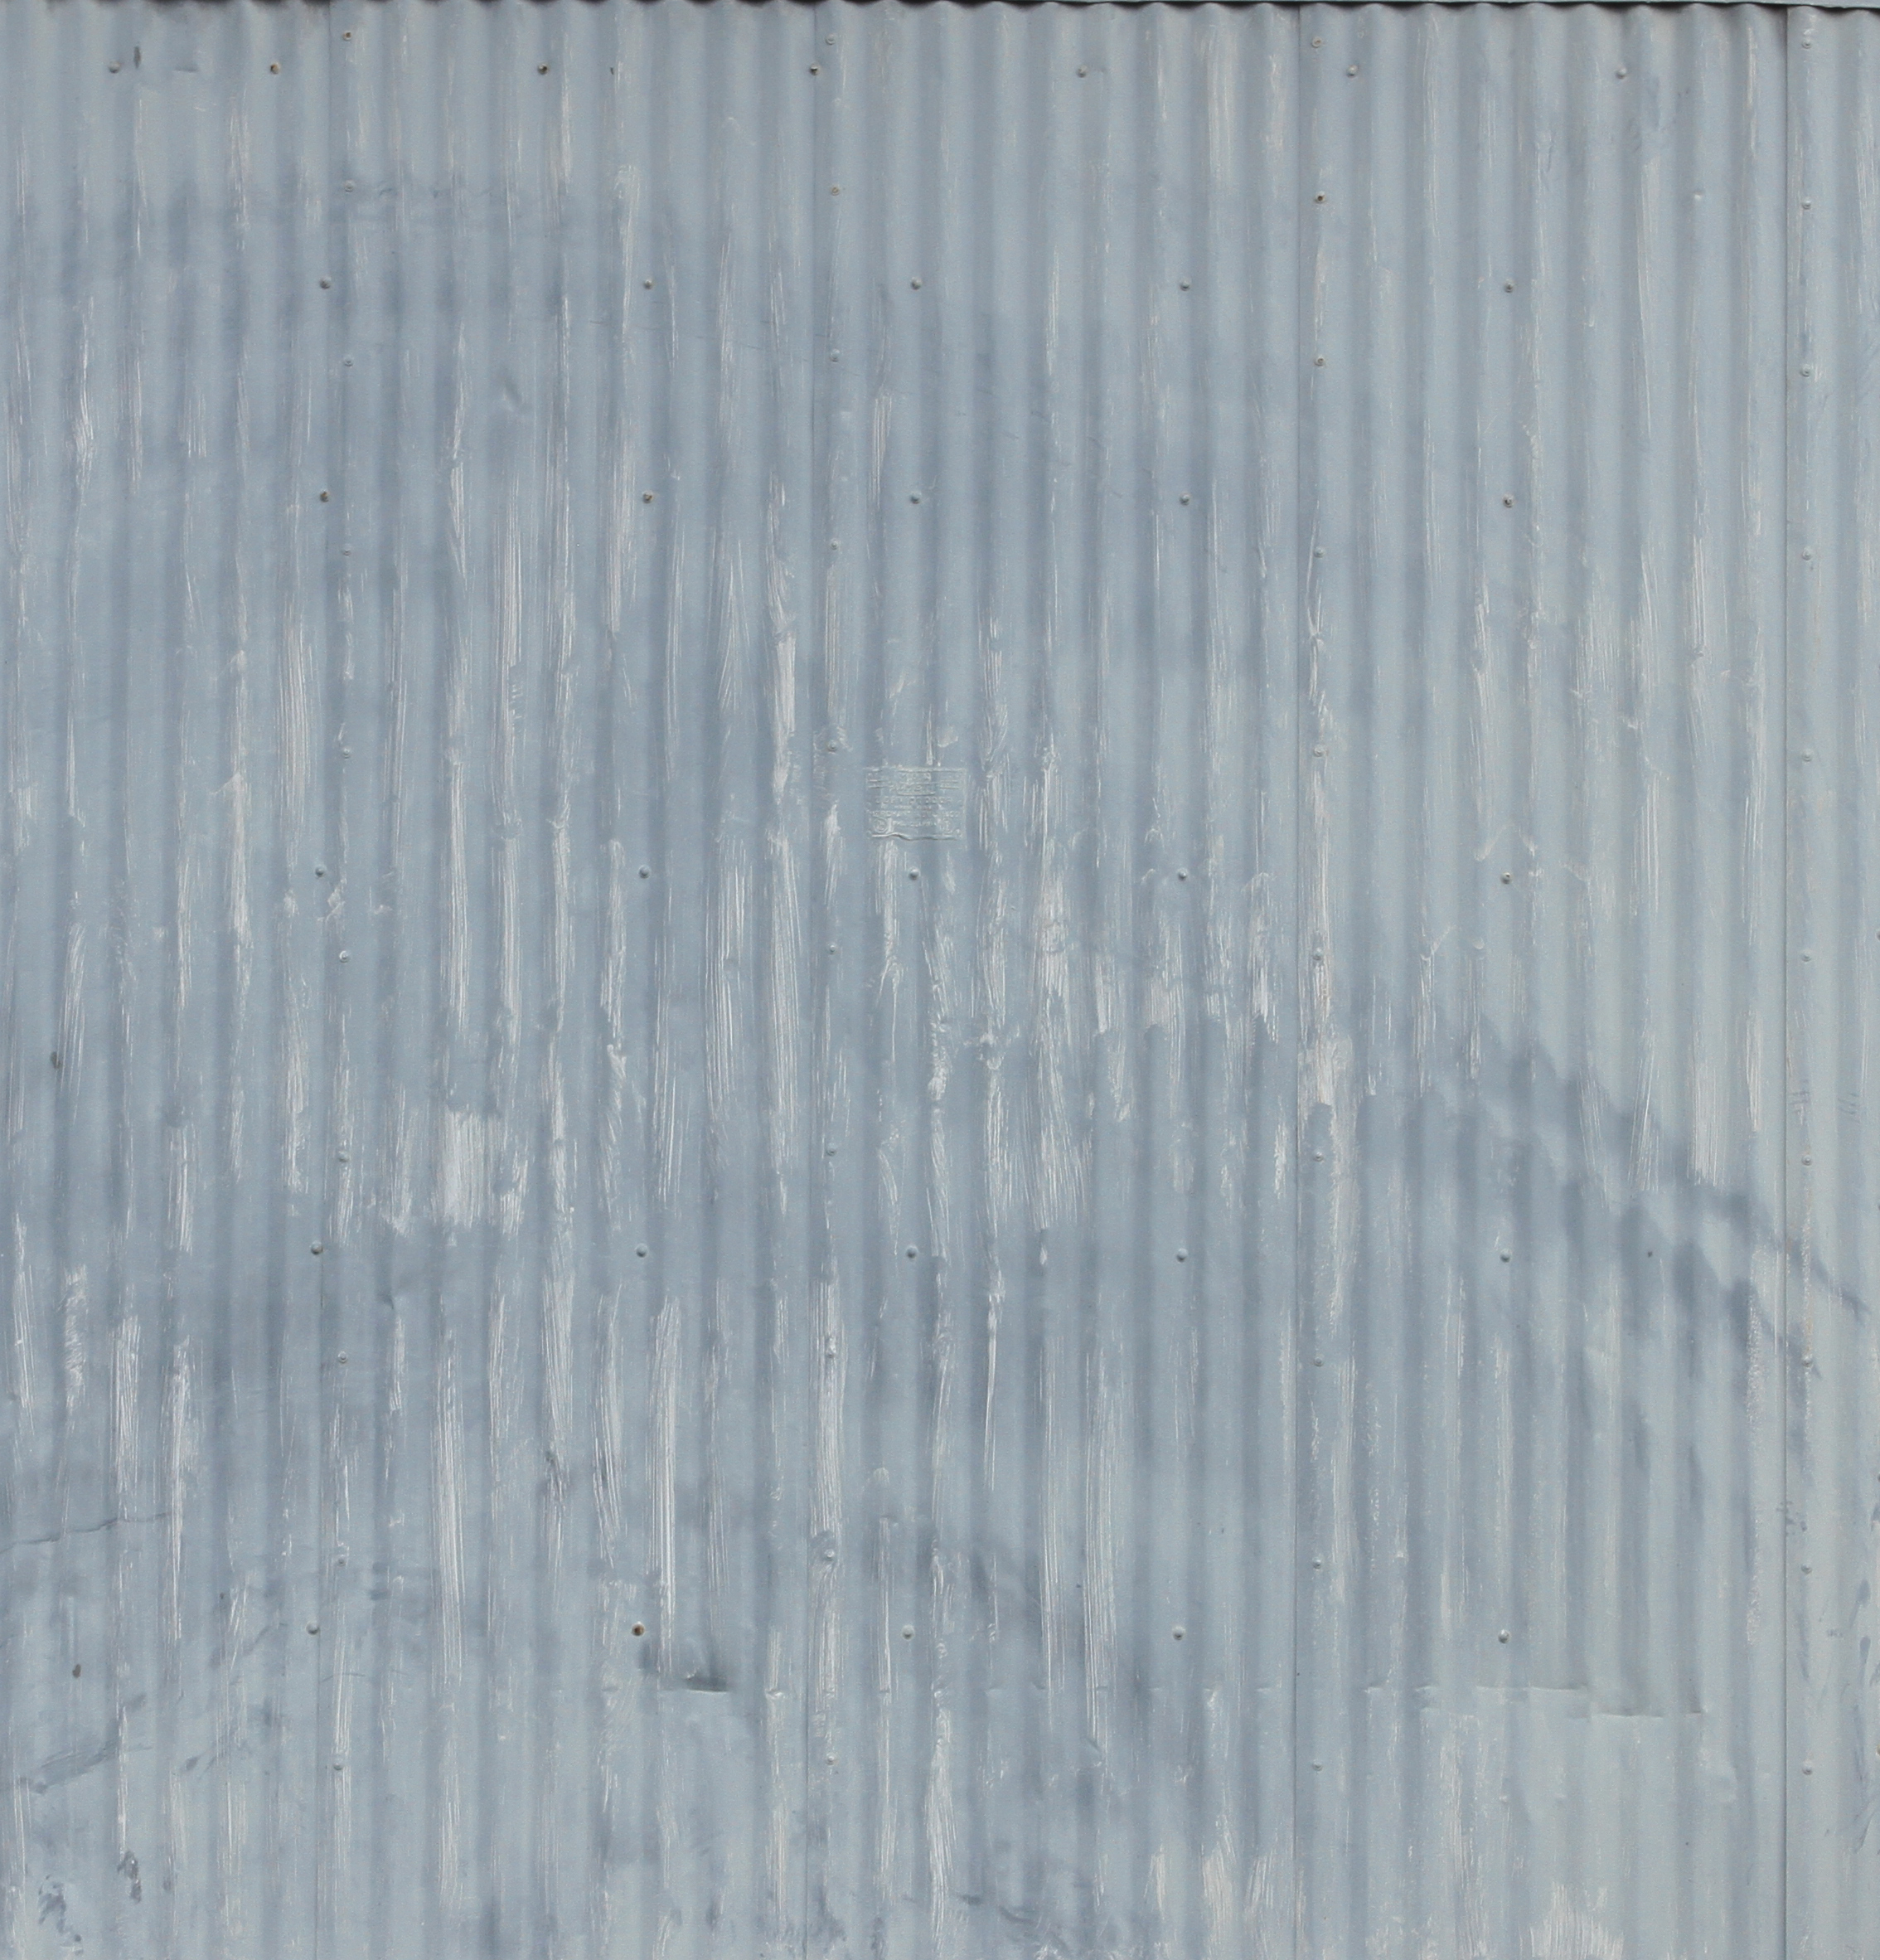 Worn Corrugated Sheet Metal texture - 14Textures